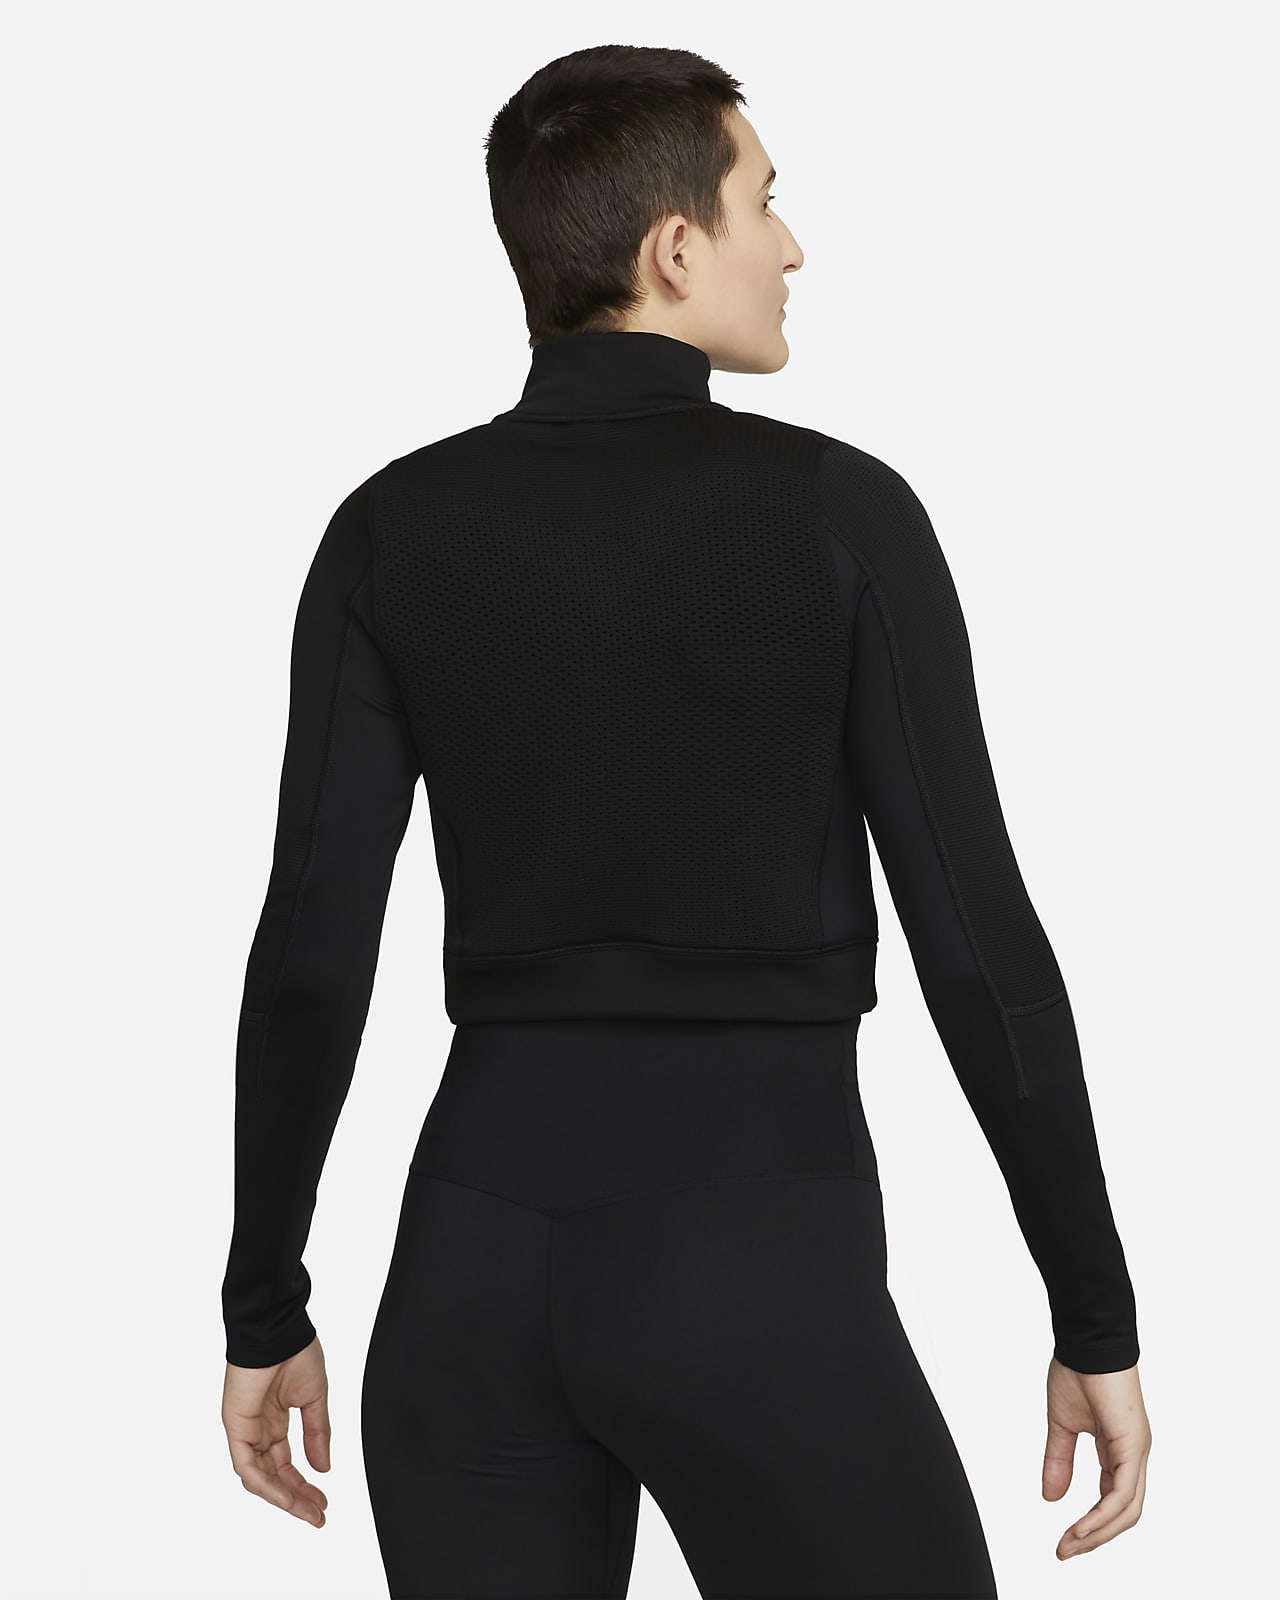 Nike City Ready Seamless Long Sleeve Training Bodysuit Black Sz Small NWT  $125